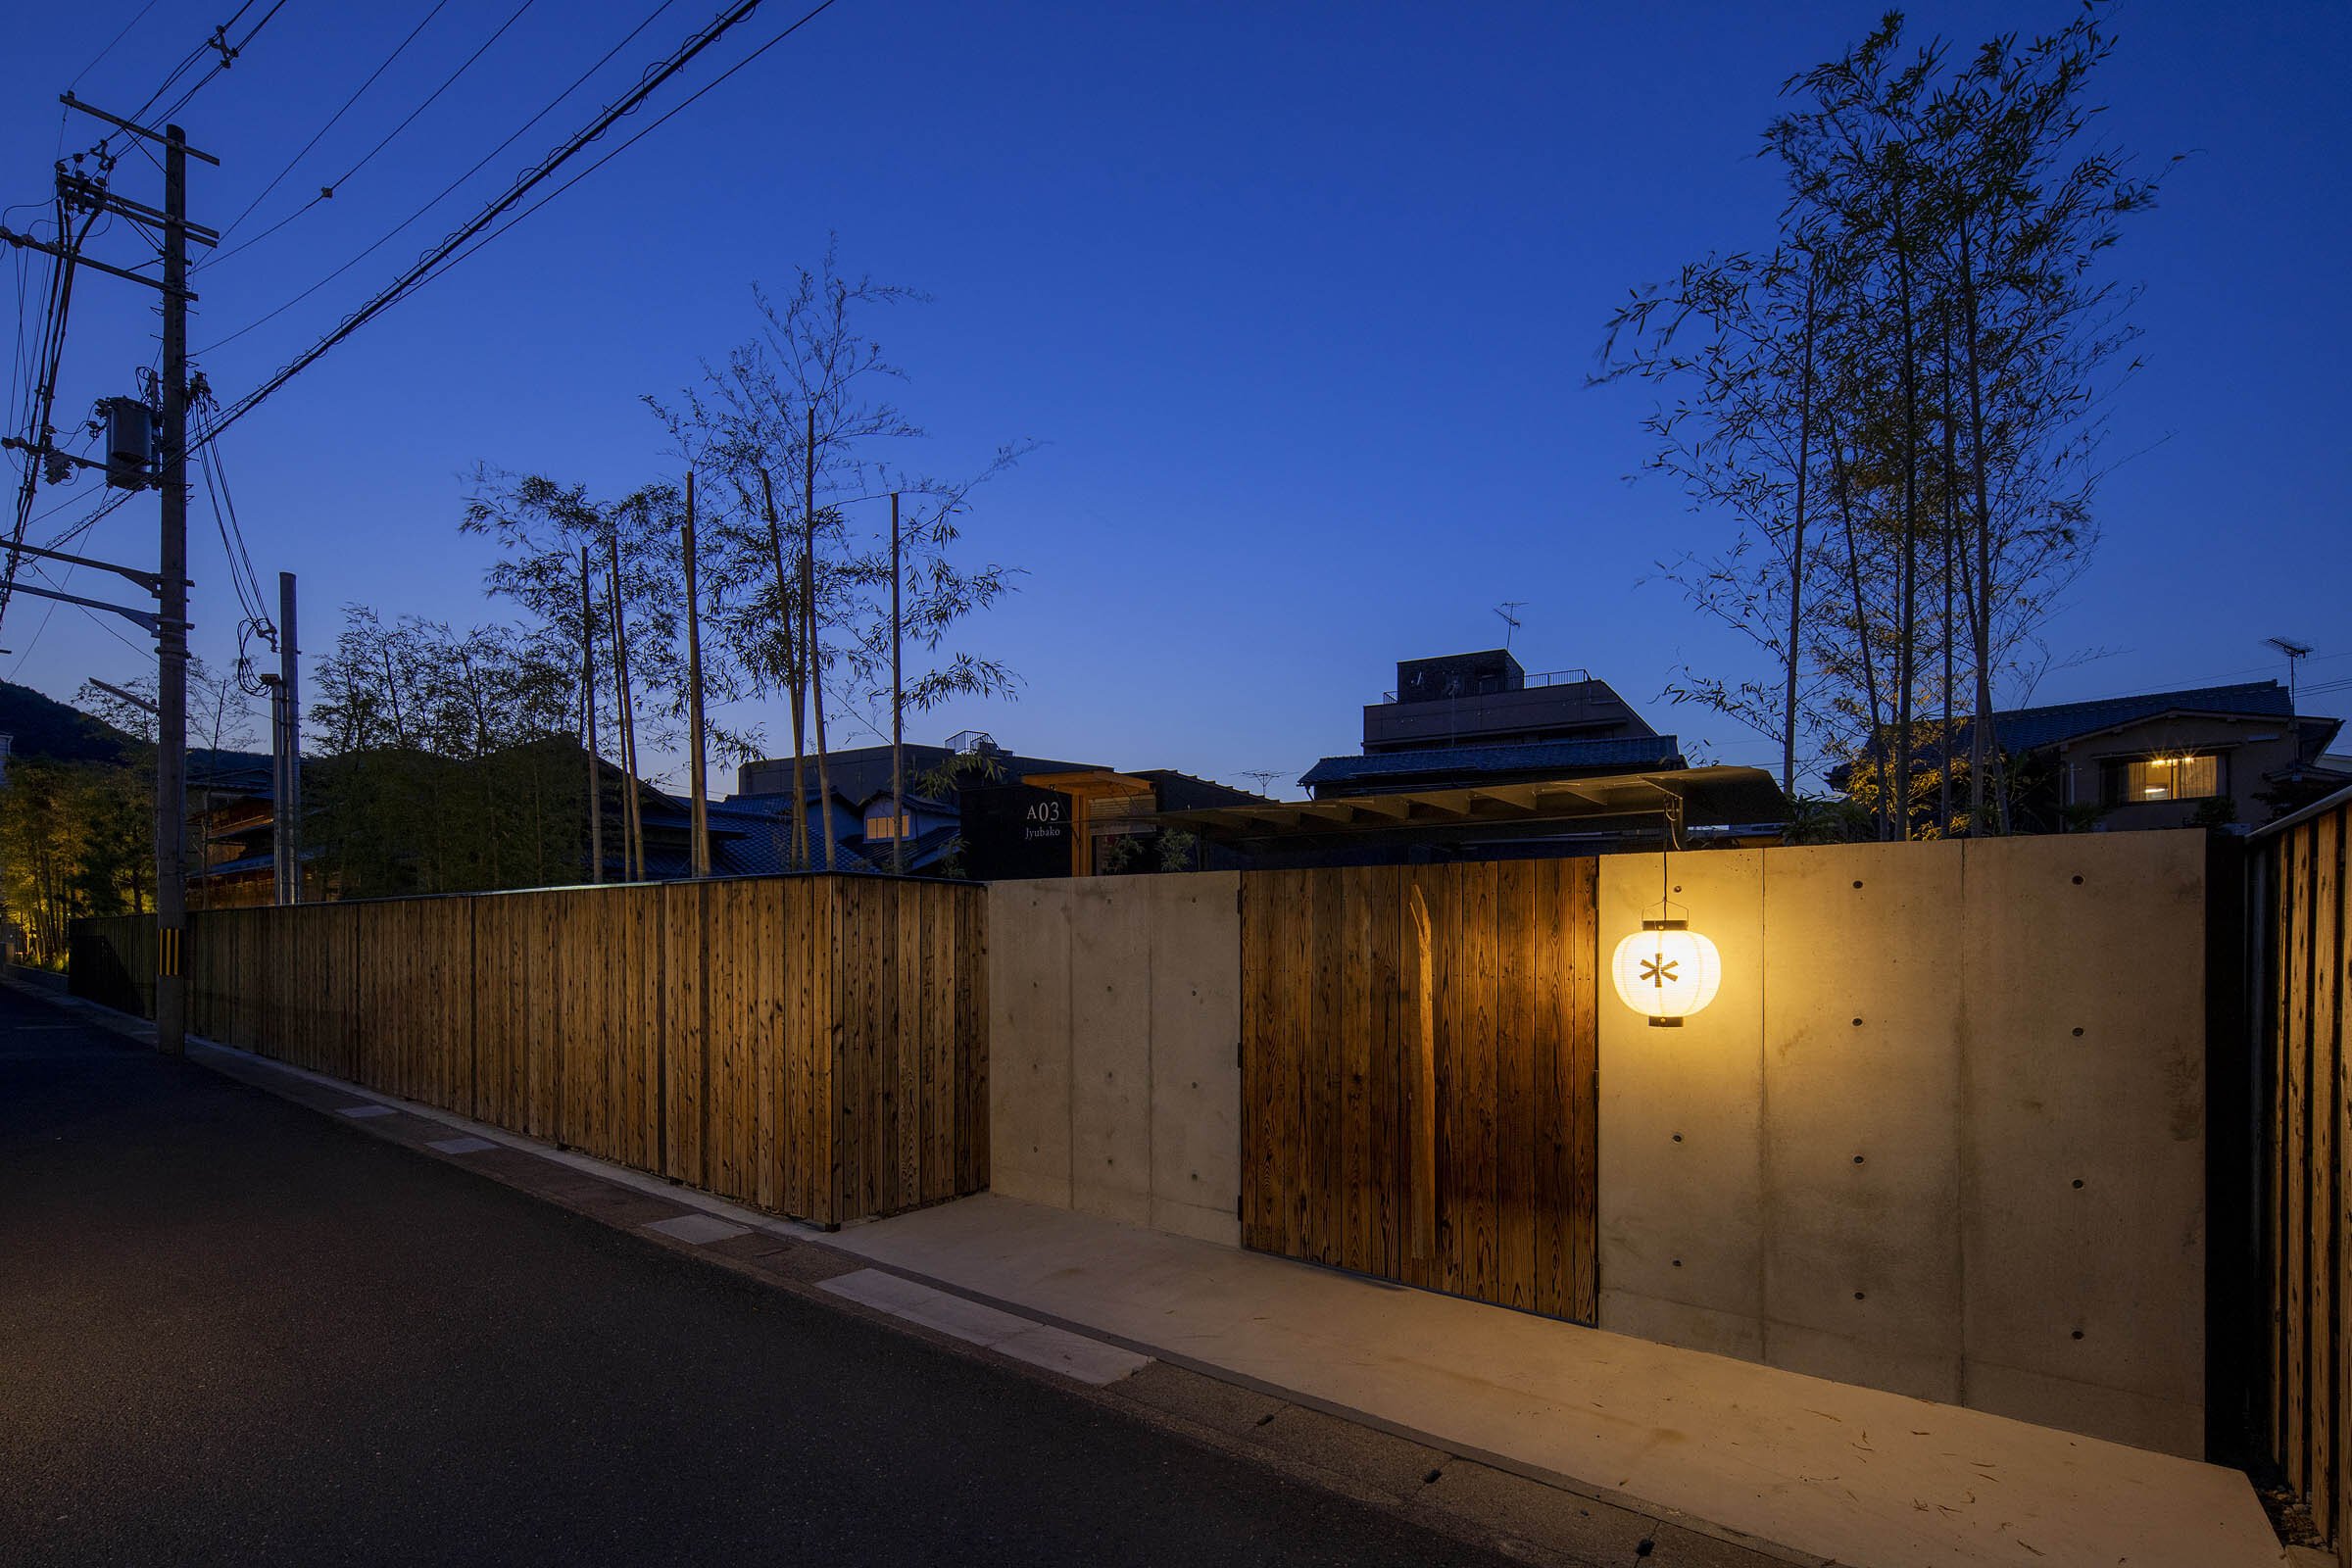  cafe co.の森井良幸がデザインしたスノーピークランドステーション京都嵐山の外観 